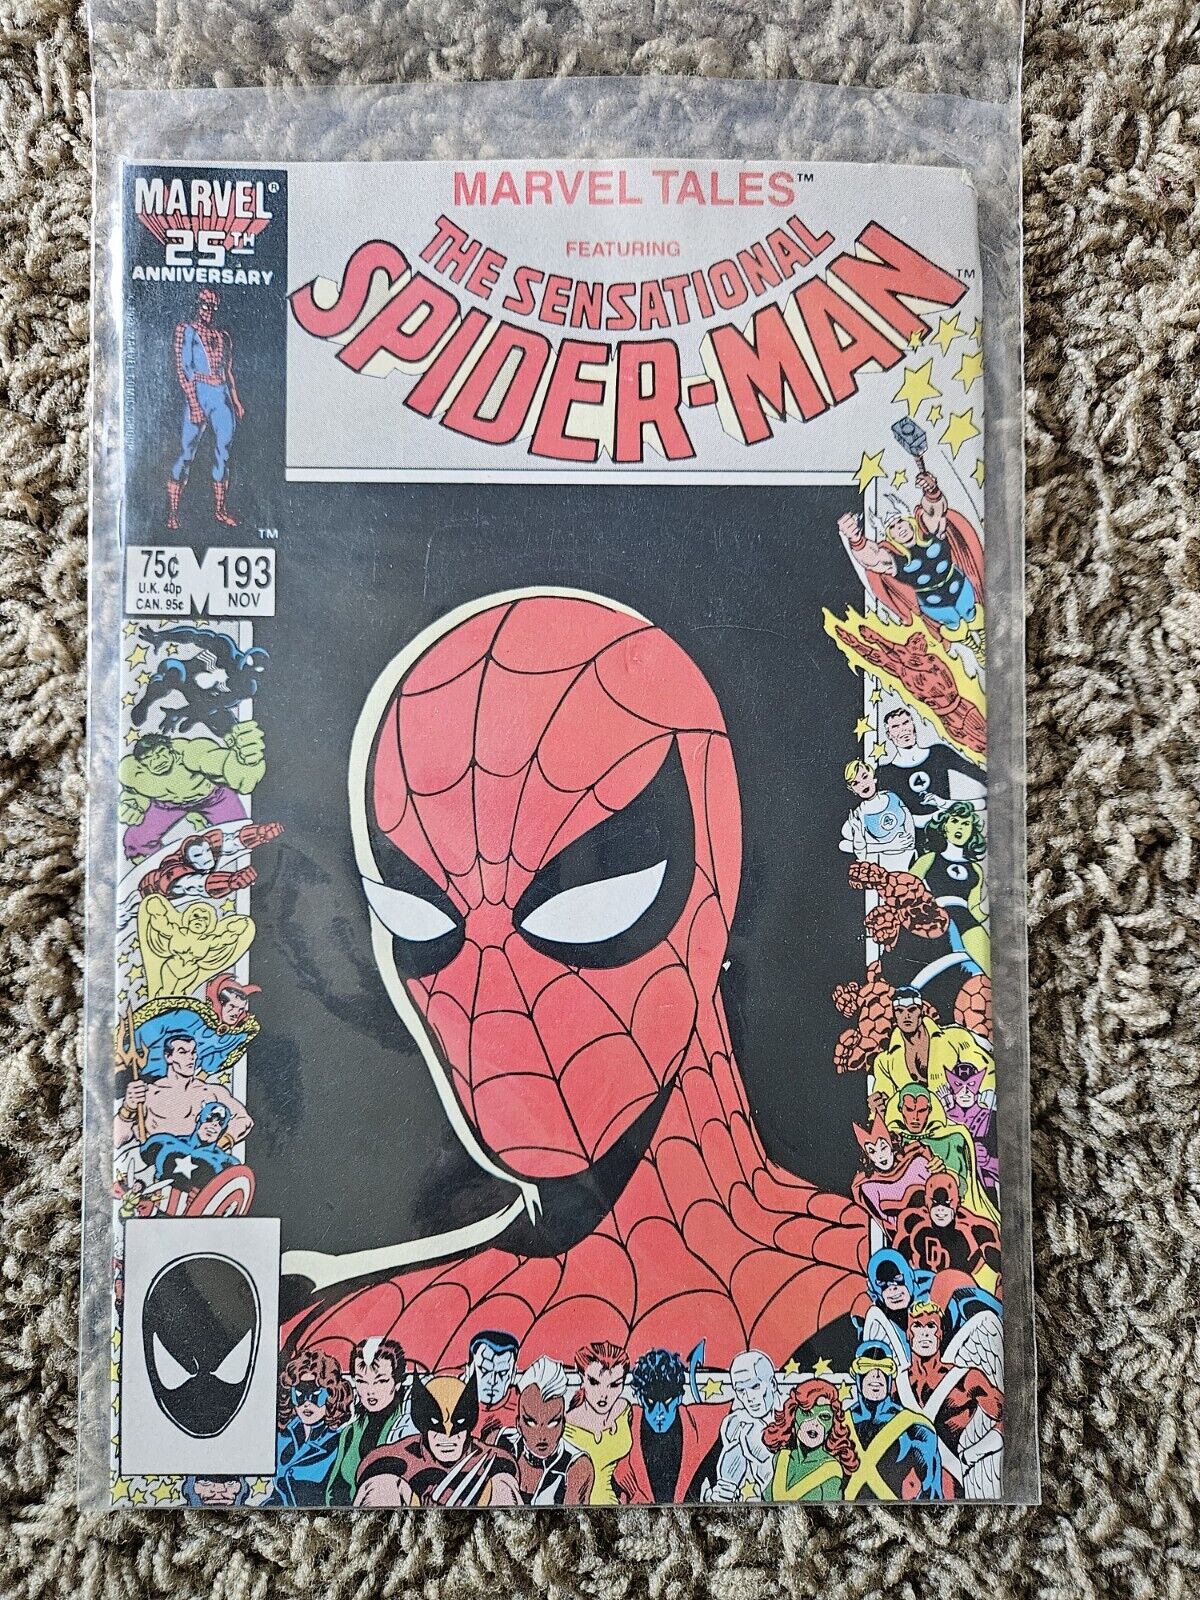 The Sensational Spider Man Comic # 193 Marvel Tales